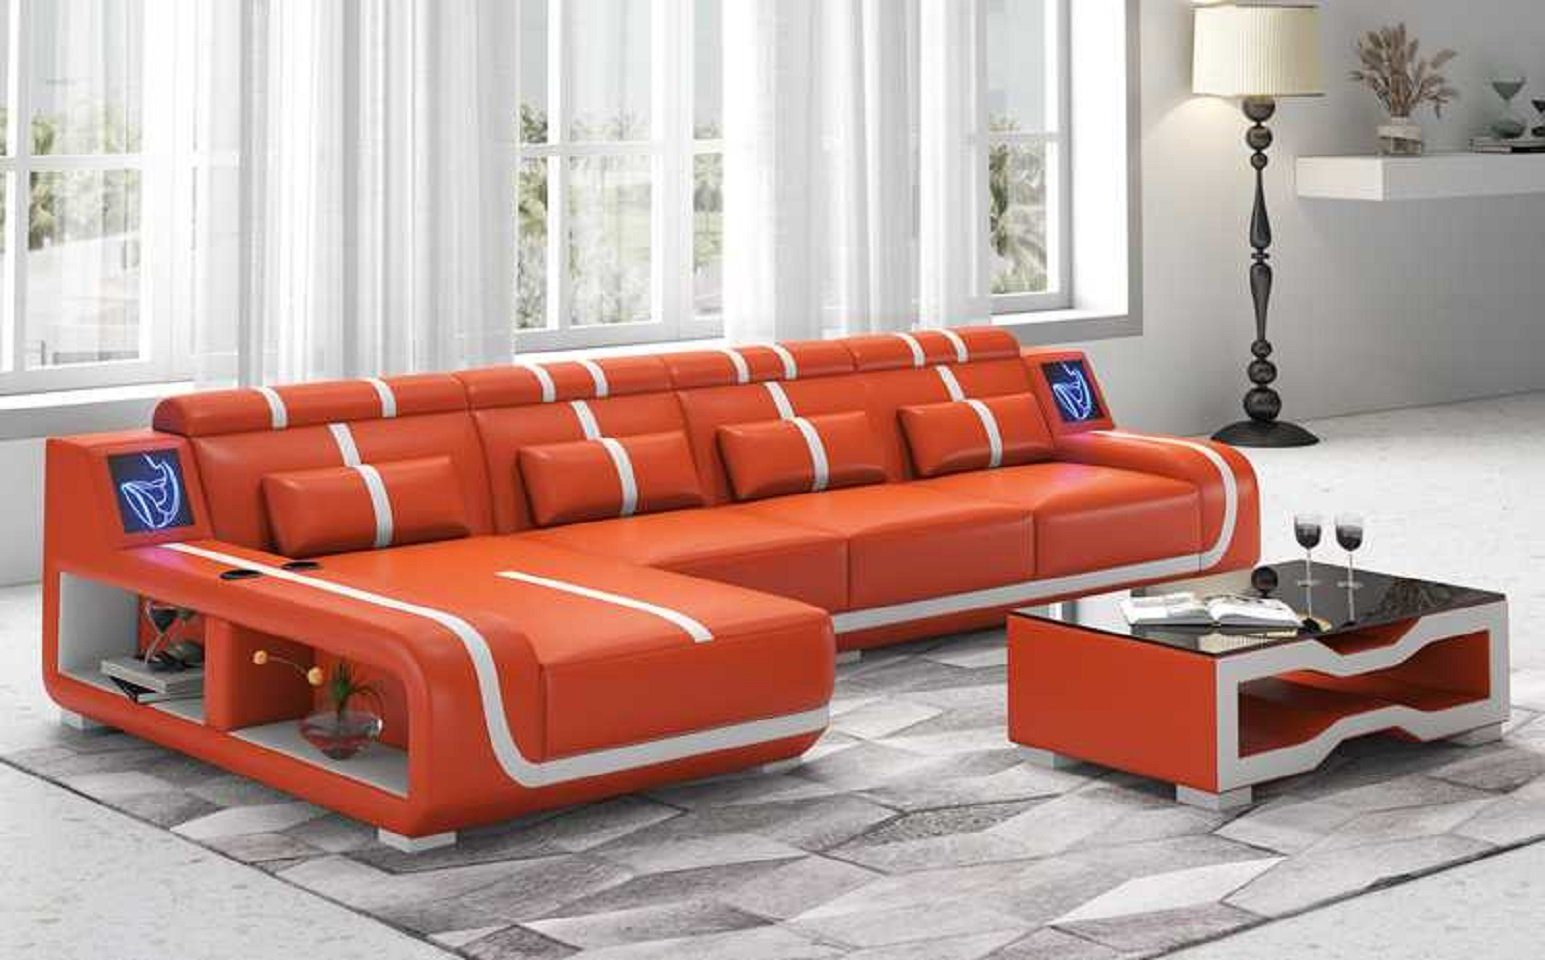 Modern Ecksofa Teile, Europe Couch Sofa in Design L Orange couchen, Ecksofa Form Liege JVmoebel Made 3